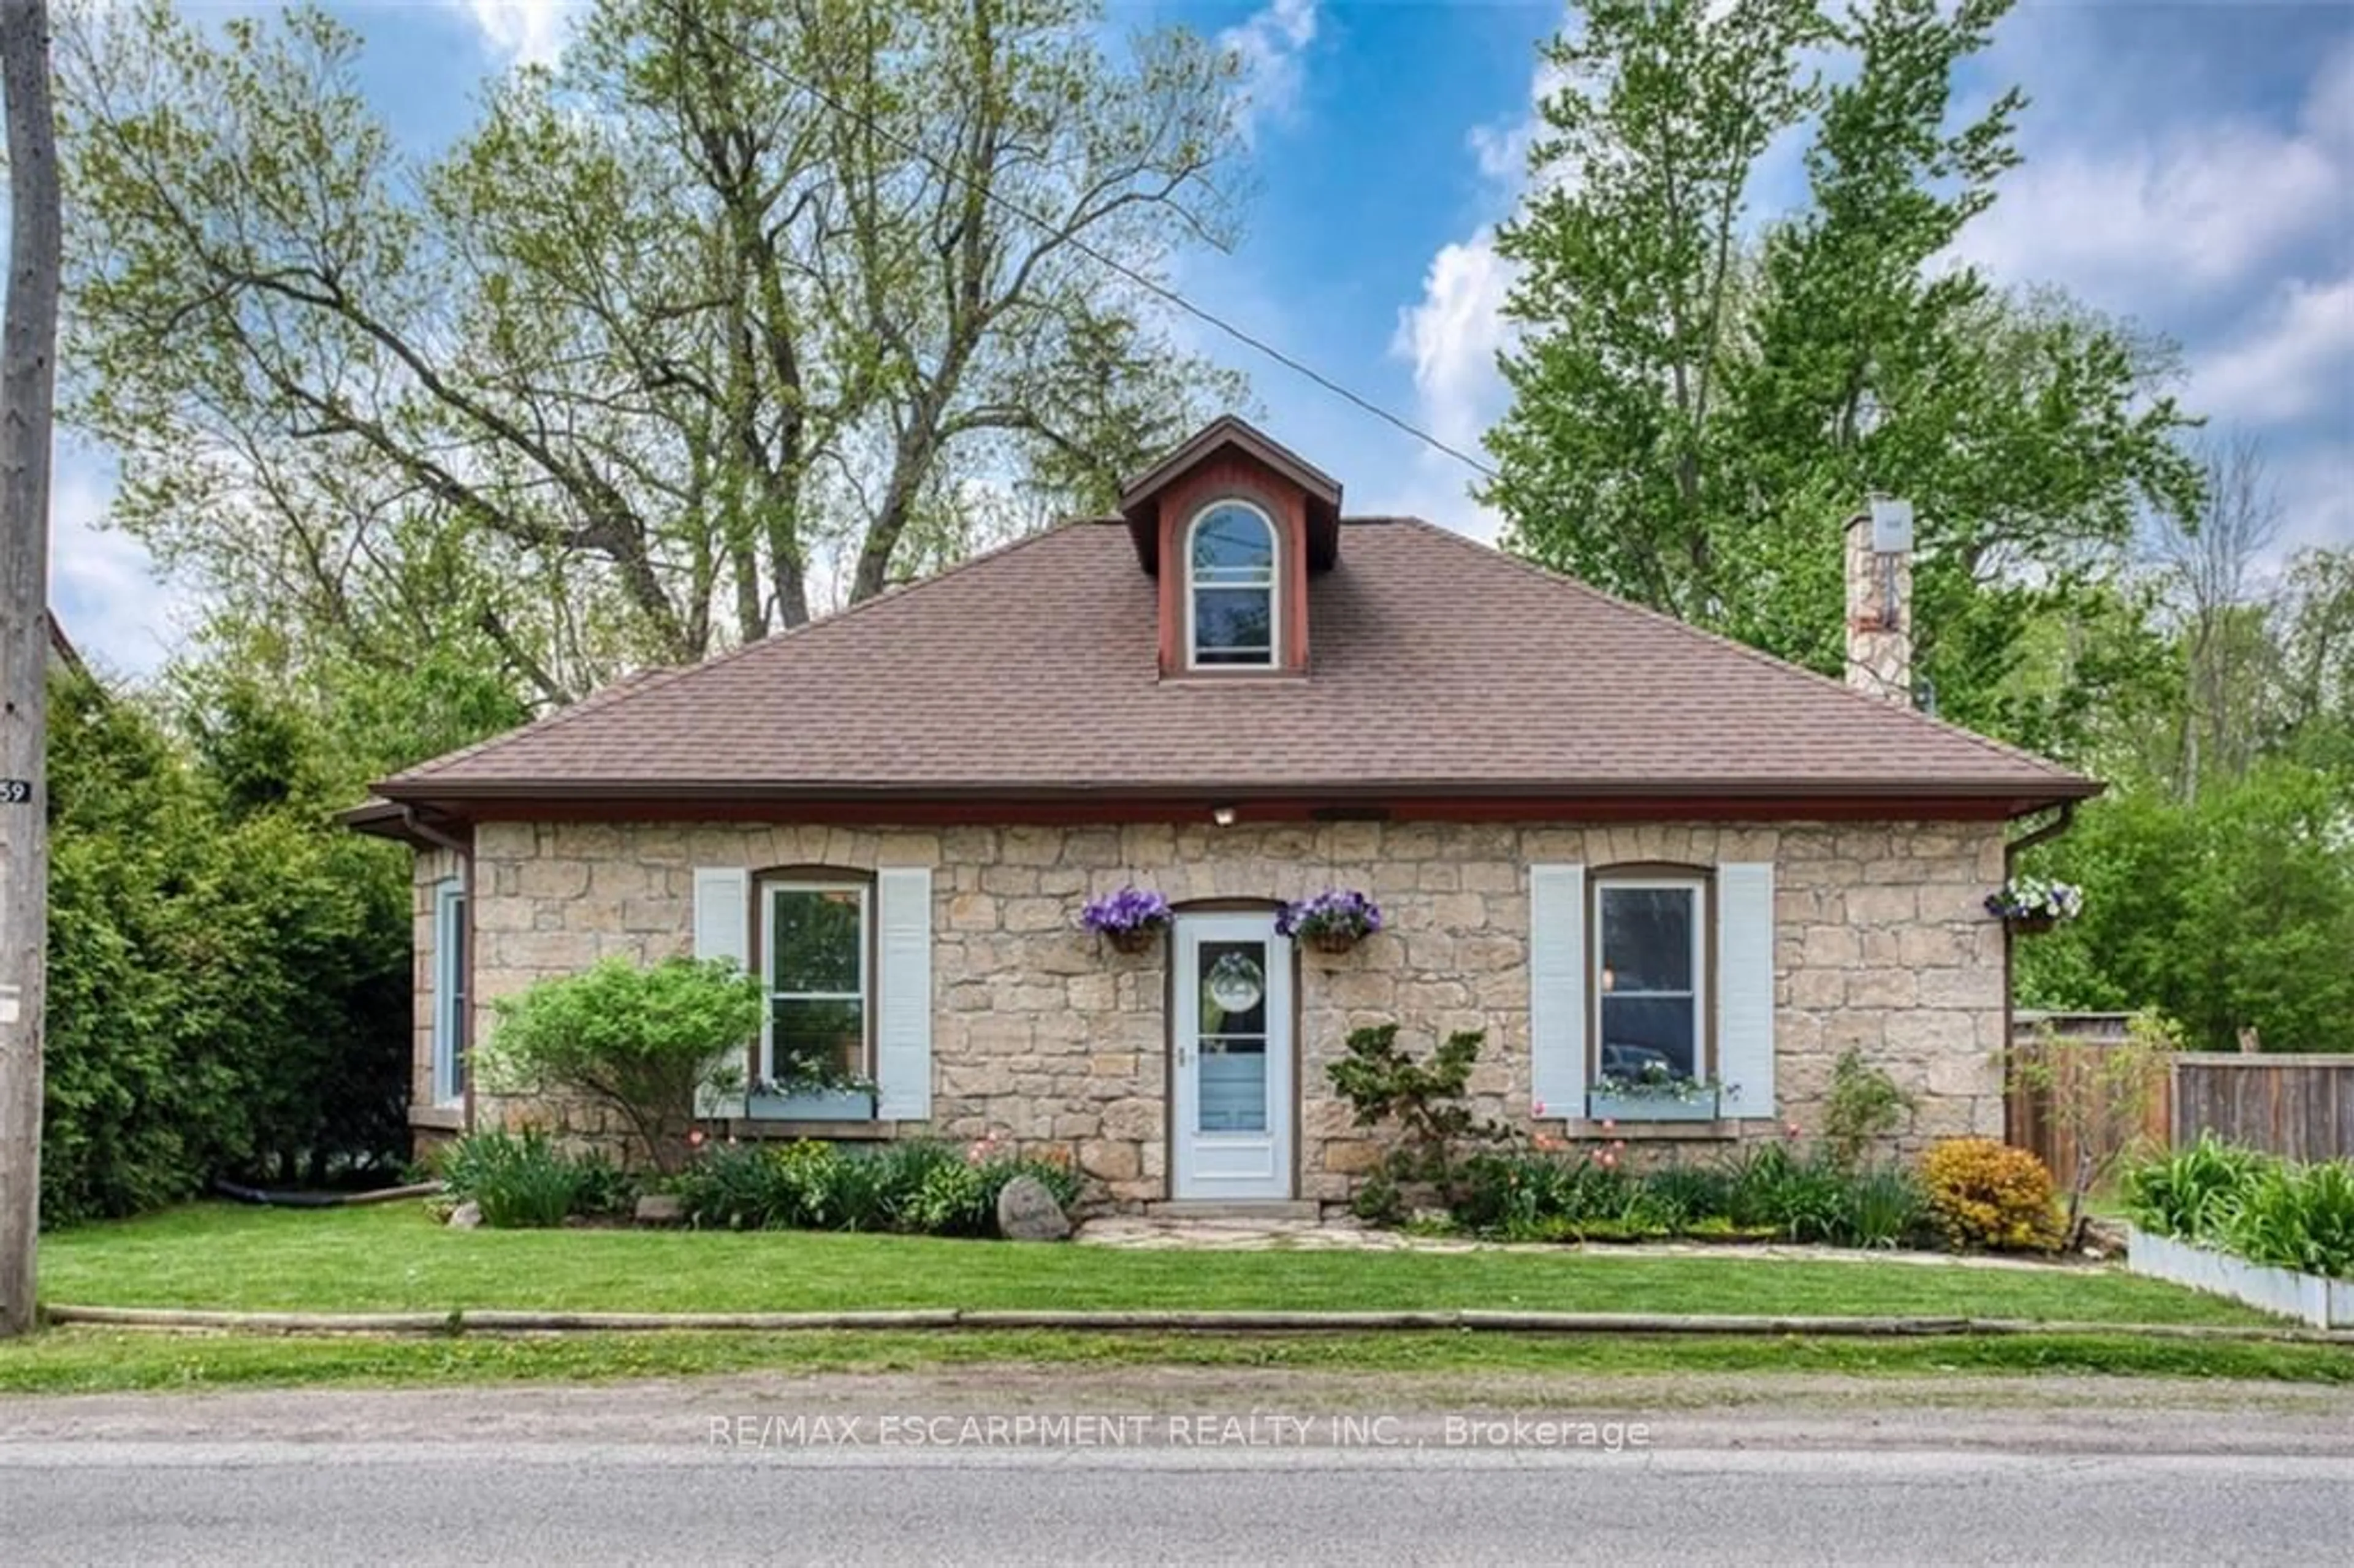 Home with brick exterior material for 1539 Brock Rd, Hamilton Ontario L9H 5E4